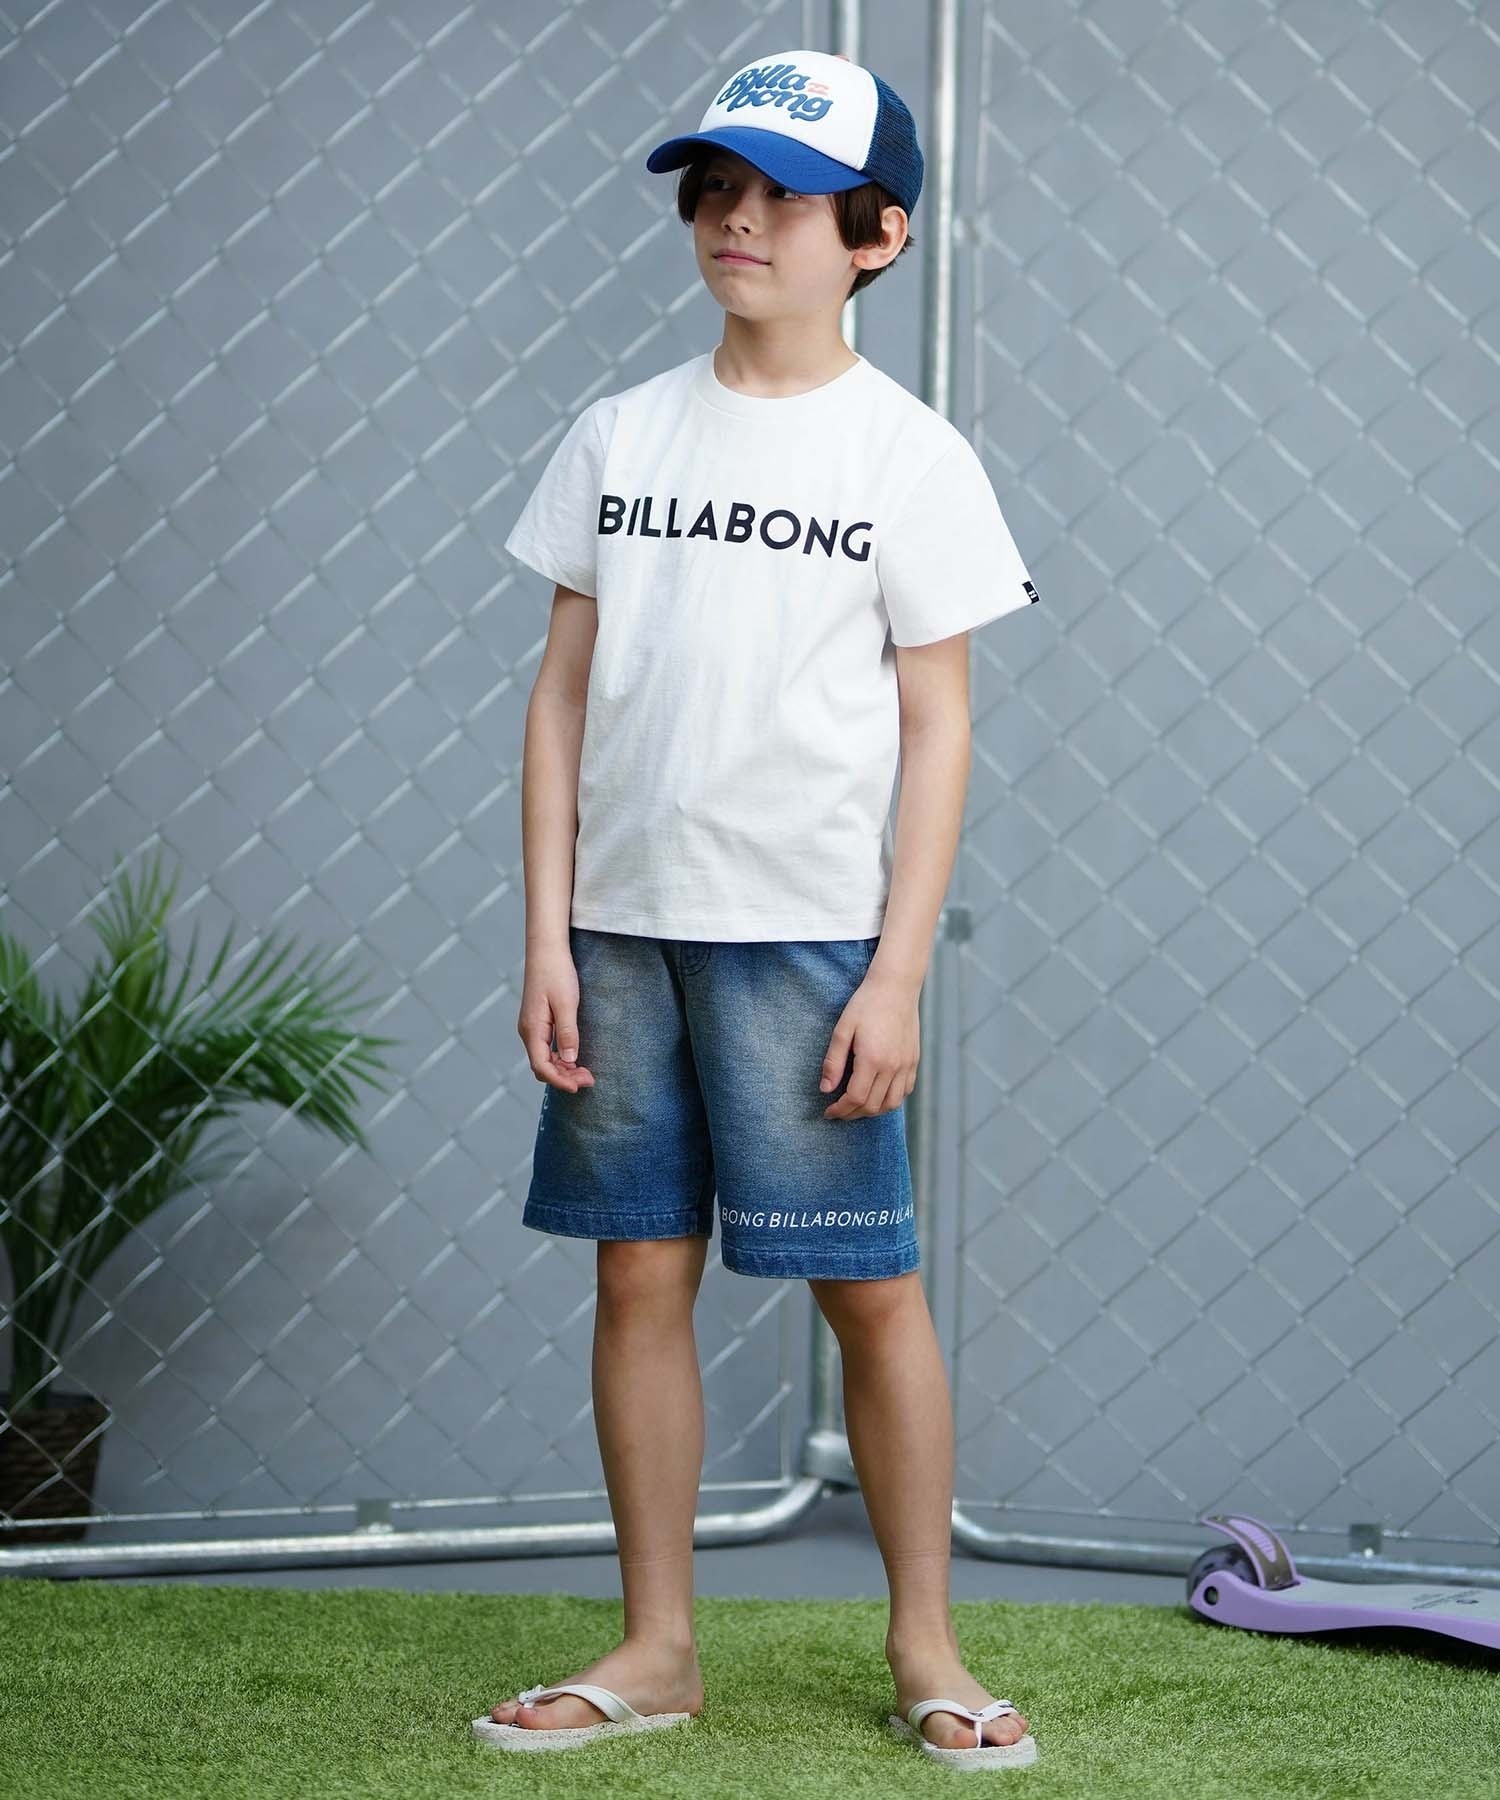 BILLABONG ビラボン UNITY LOGO キッズ 半袖 Tシャツ BE015-204(WHT-90cm)